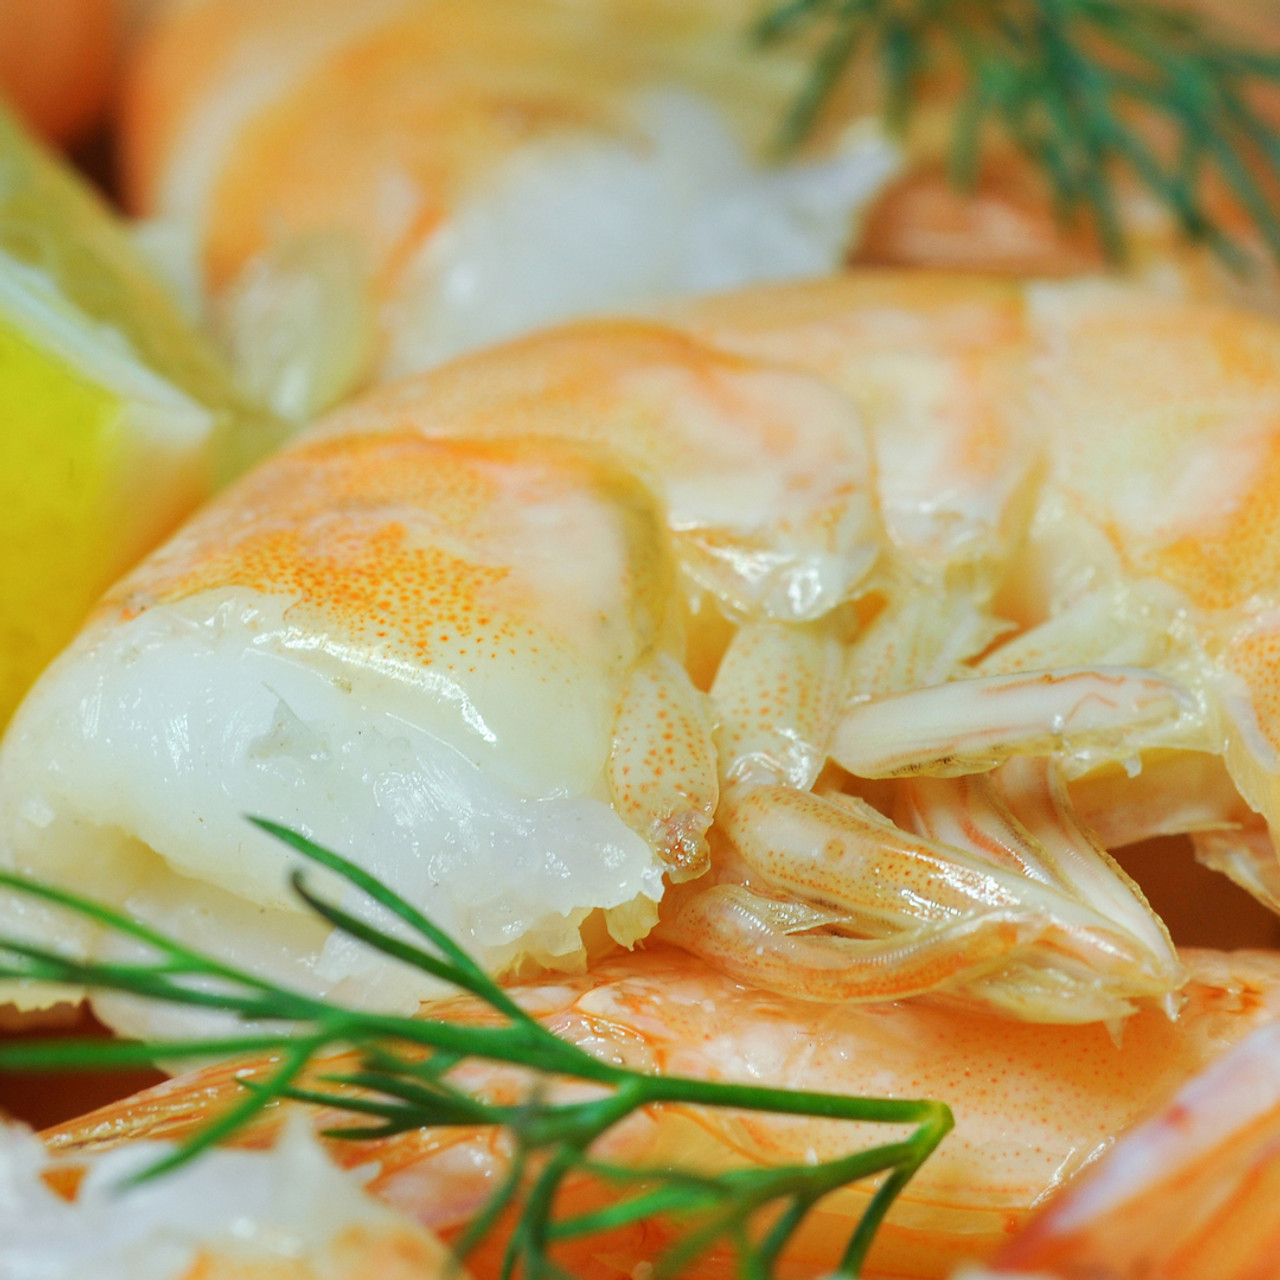 Collectief Centimeter Wederzijds Order Extra Jumbo Headless Gulf Coast Shrimp in the U.S. – Biloxi Shrimp Co.